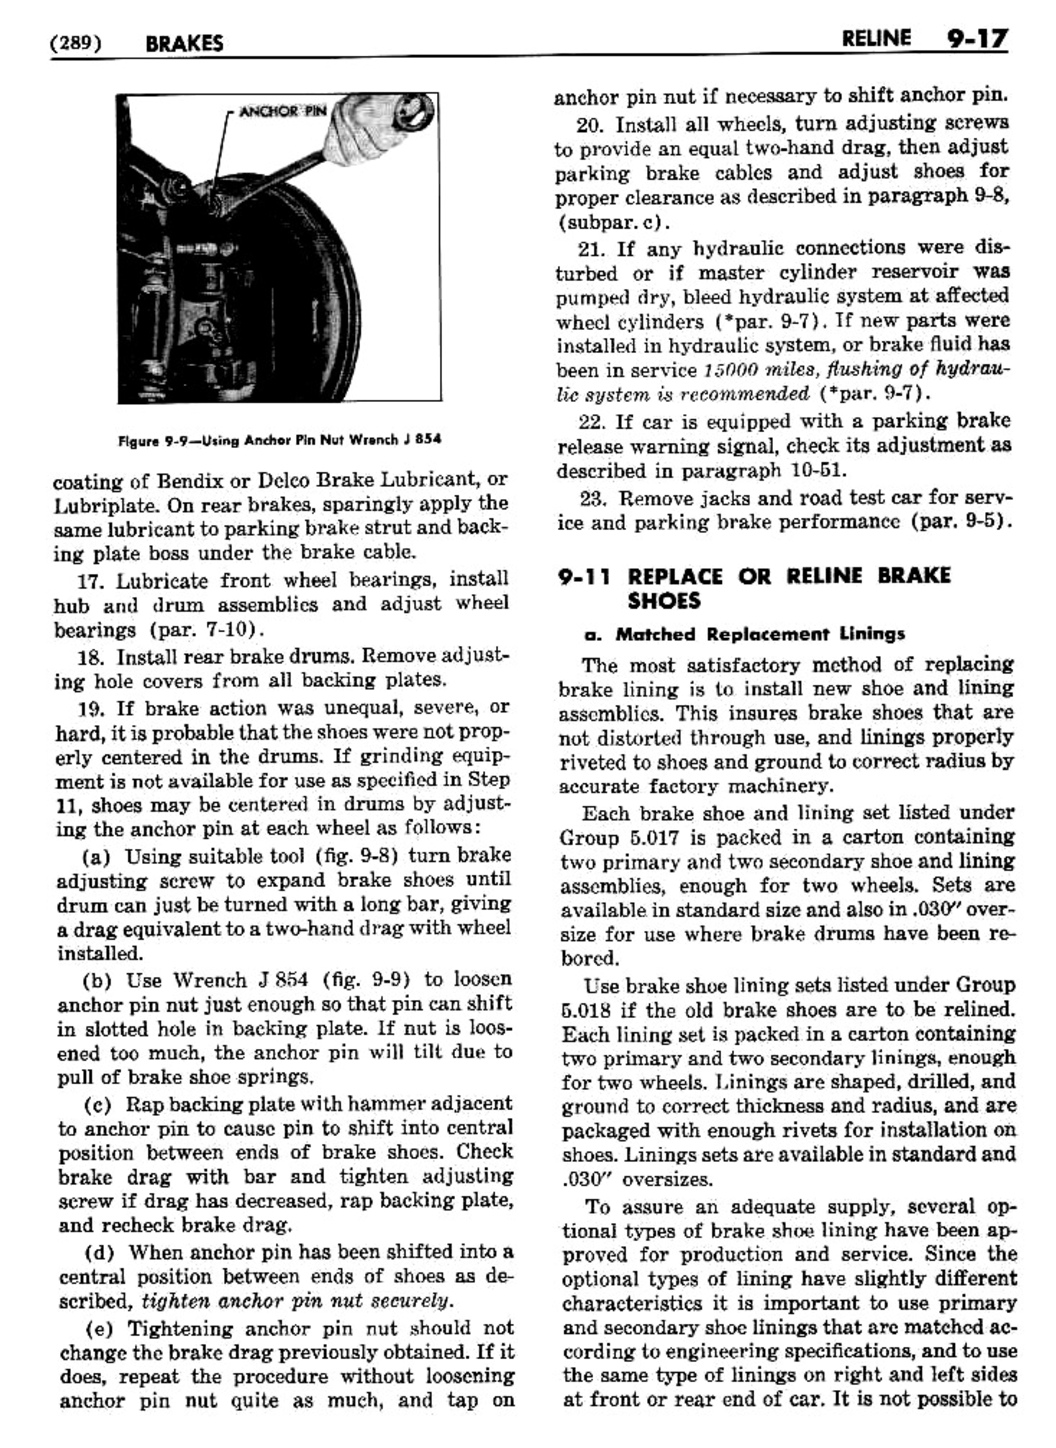 n_10 1955 Buick Shop Manual - Brakes-017-017.jpg